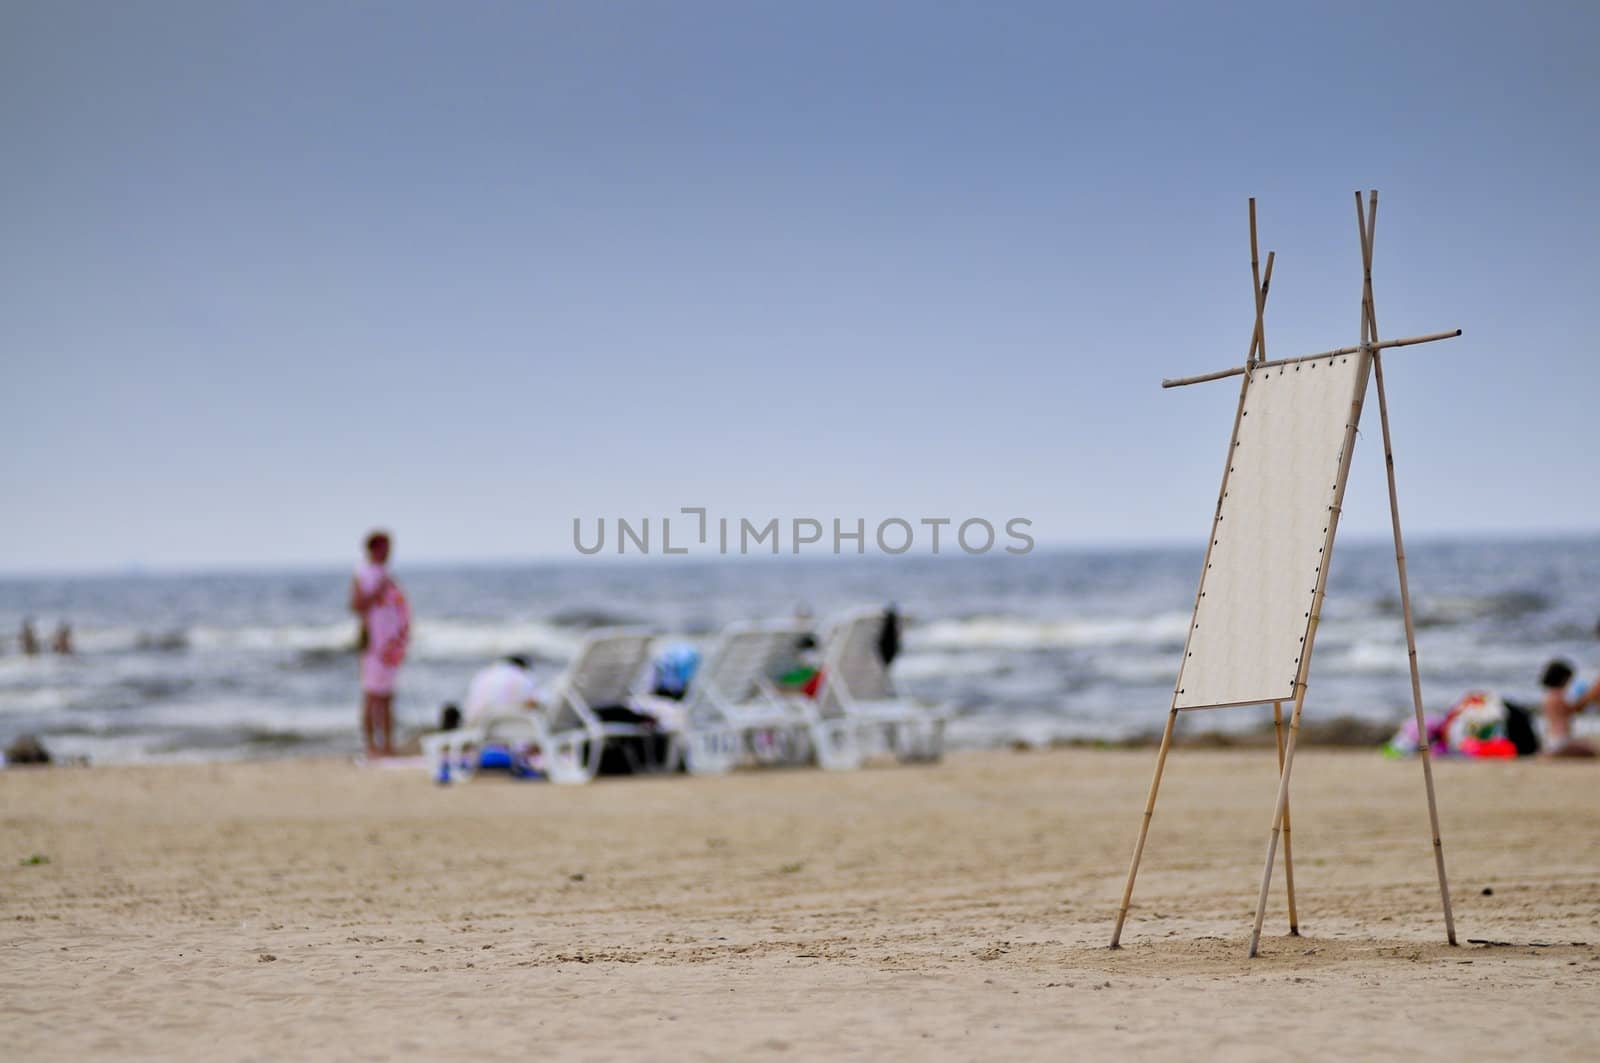 Menu board on sand of beach